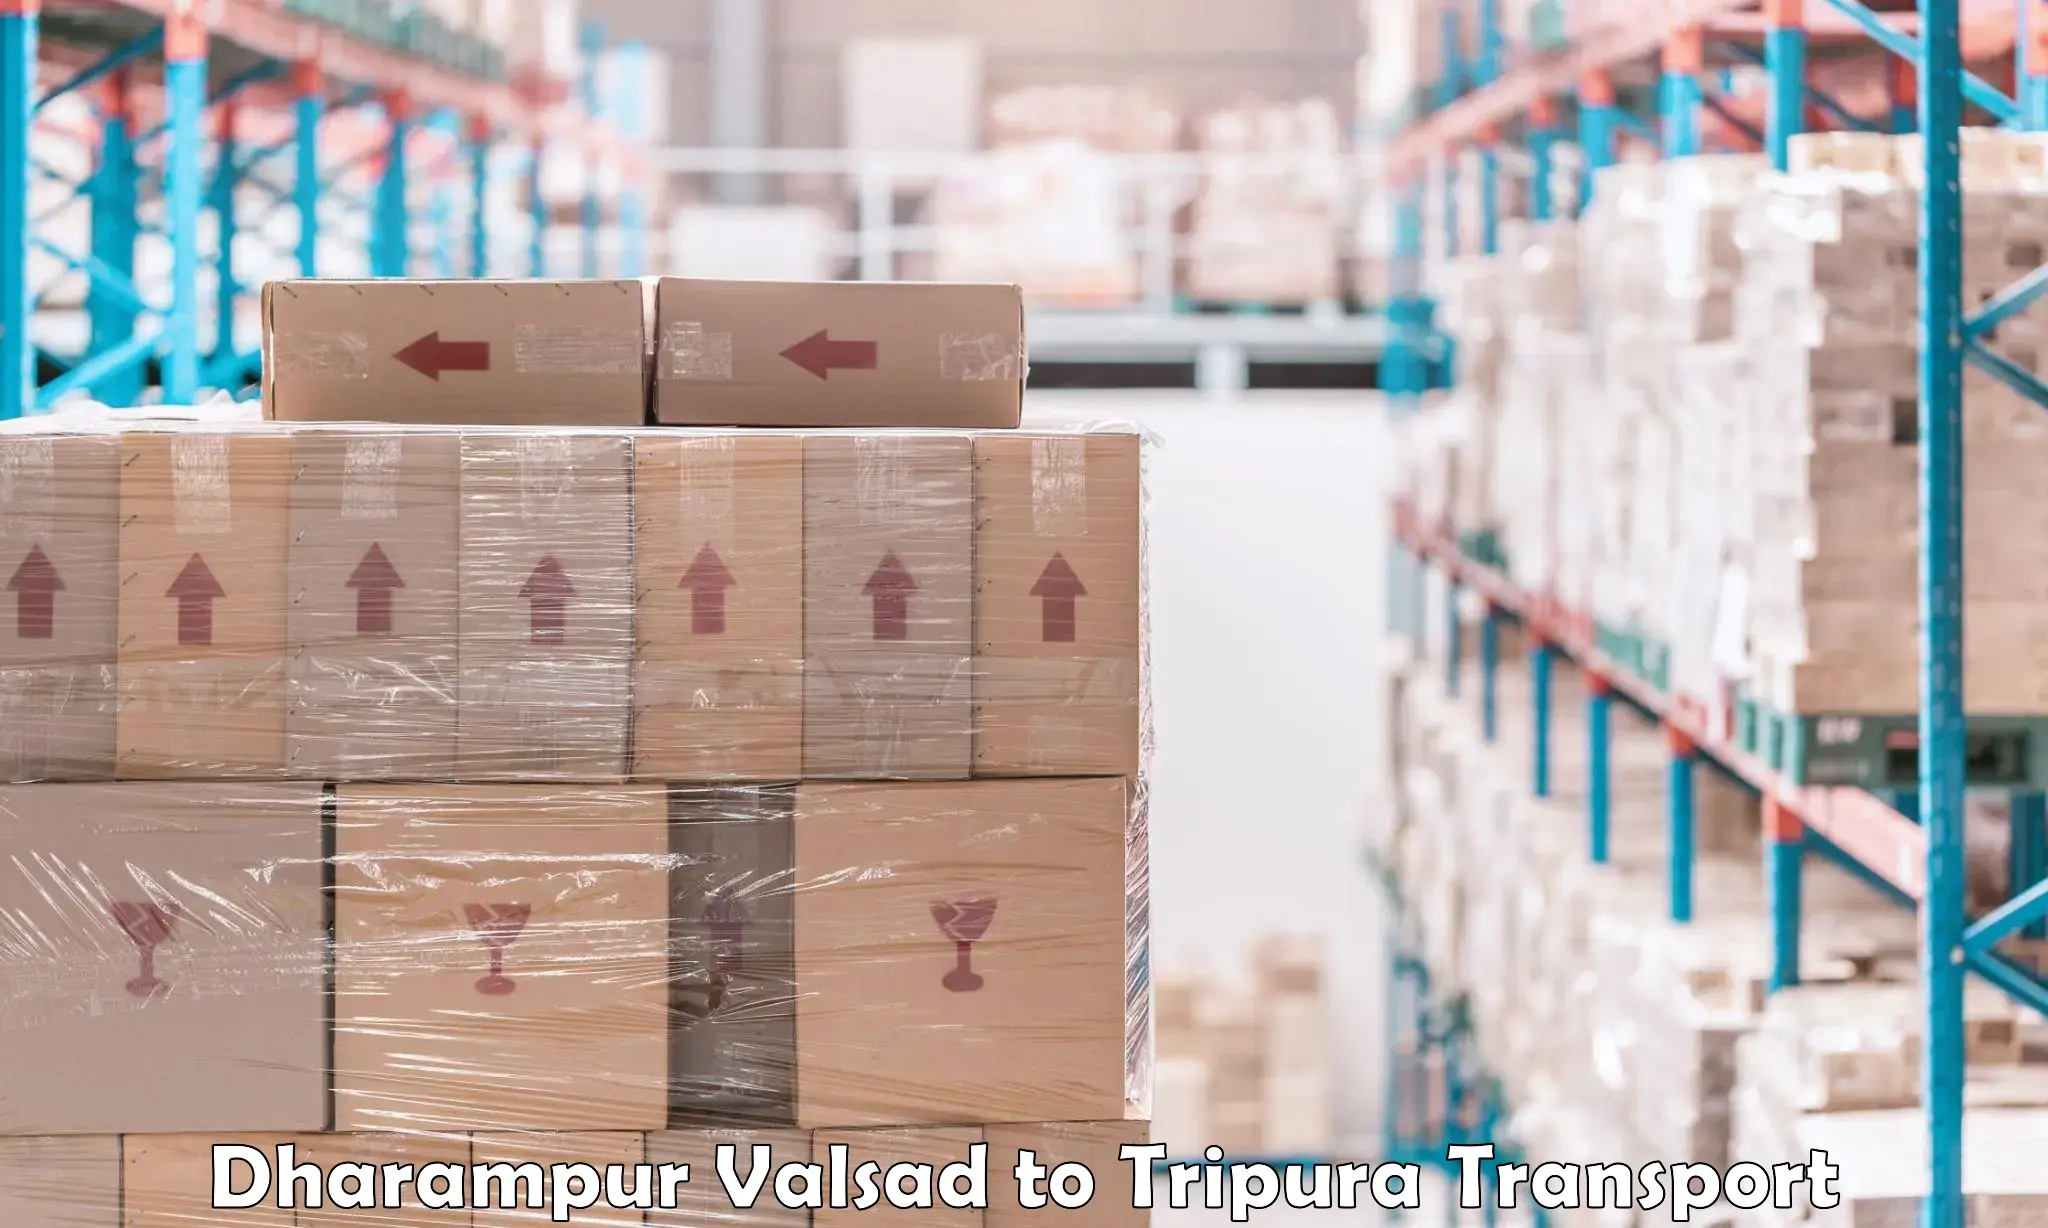 Daily parcel service transport Dharampur Valsad to Udaipur Tripura